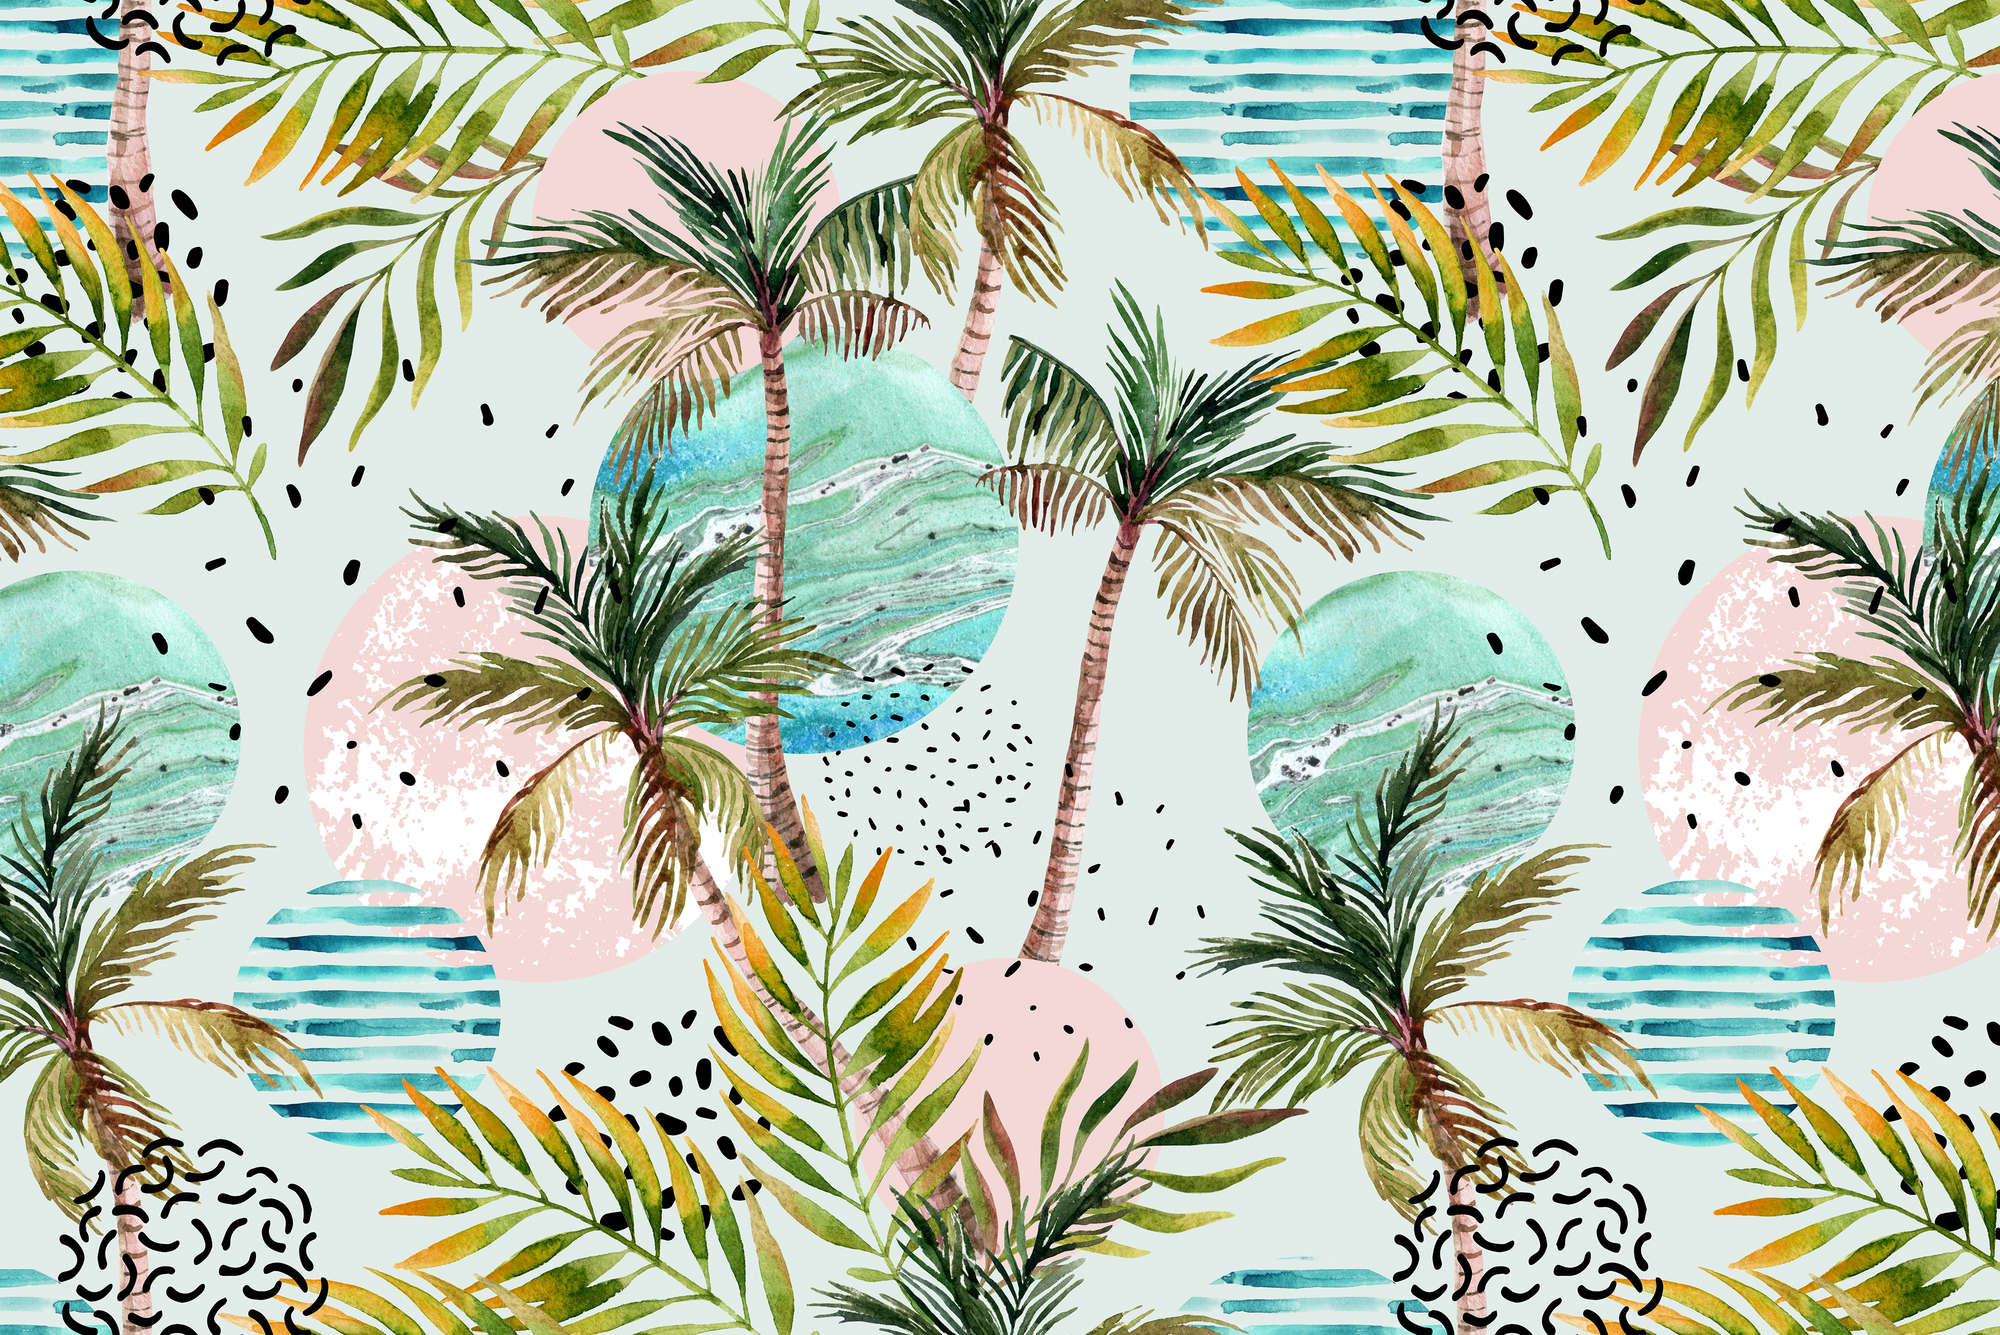             Grafik Fototapete Palmen mit Wellensymbolen auf Matt Glattvlies
        